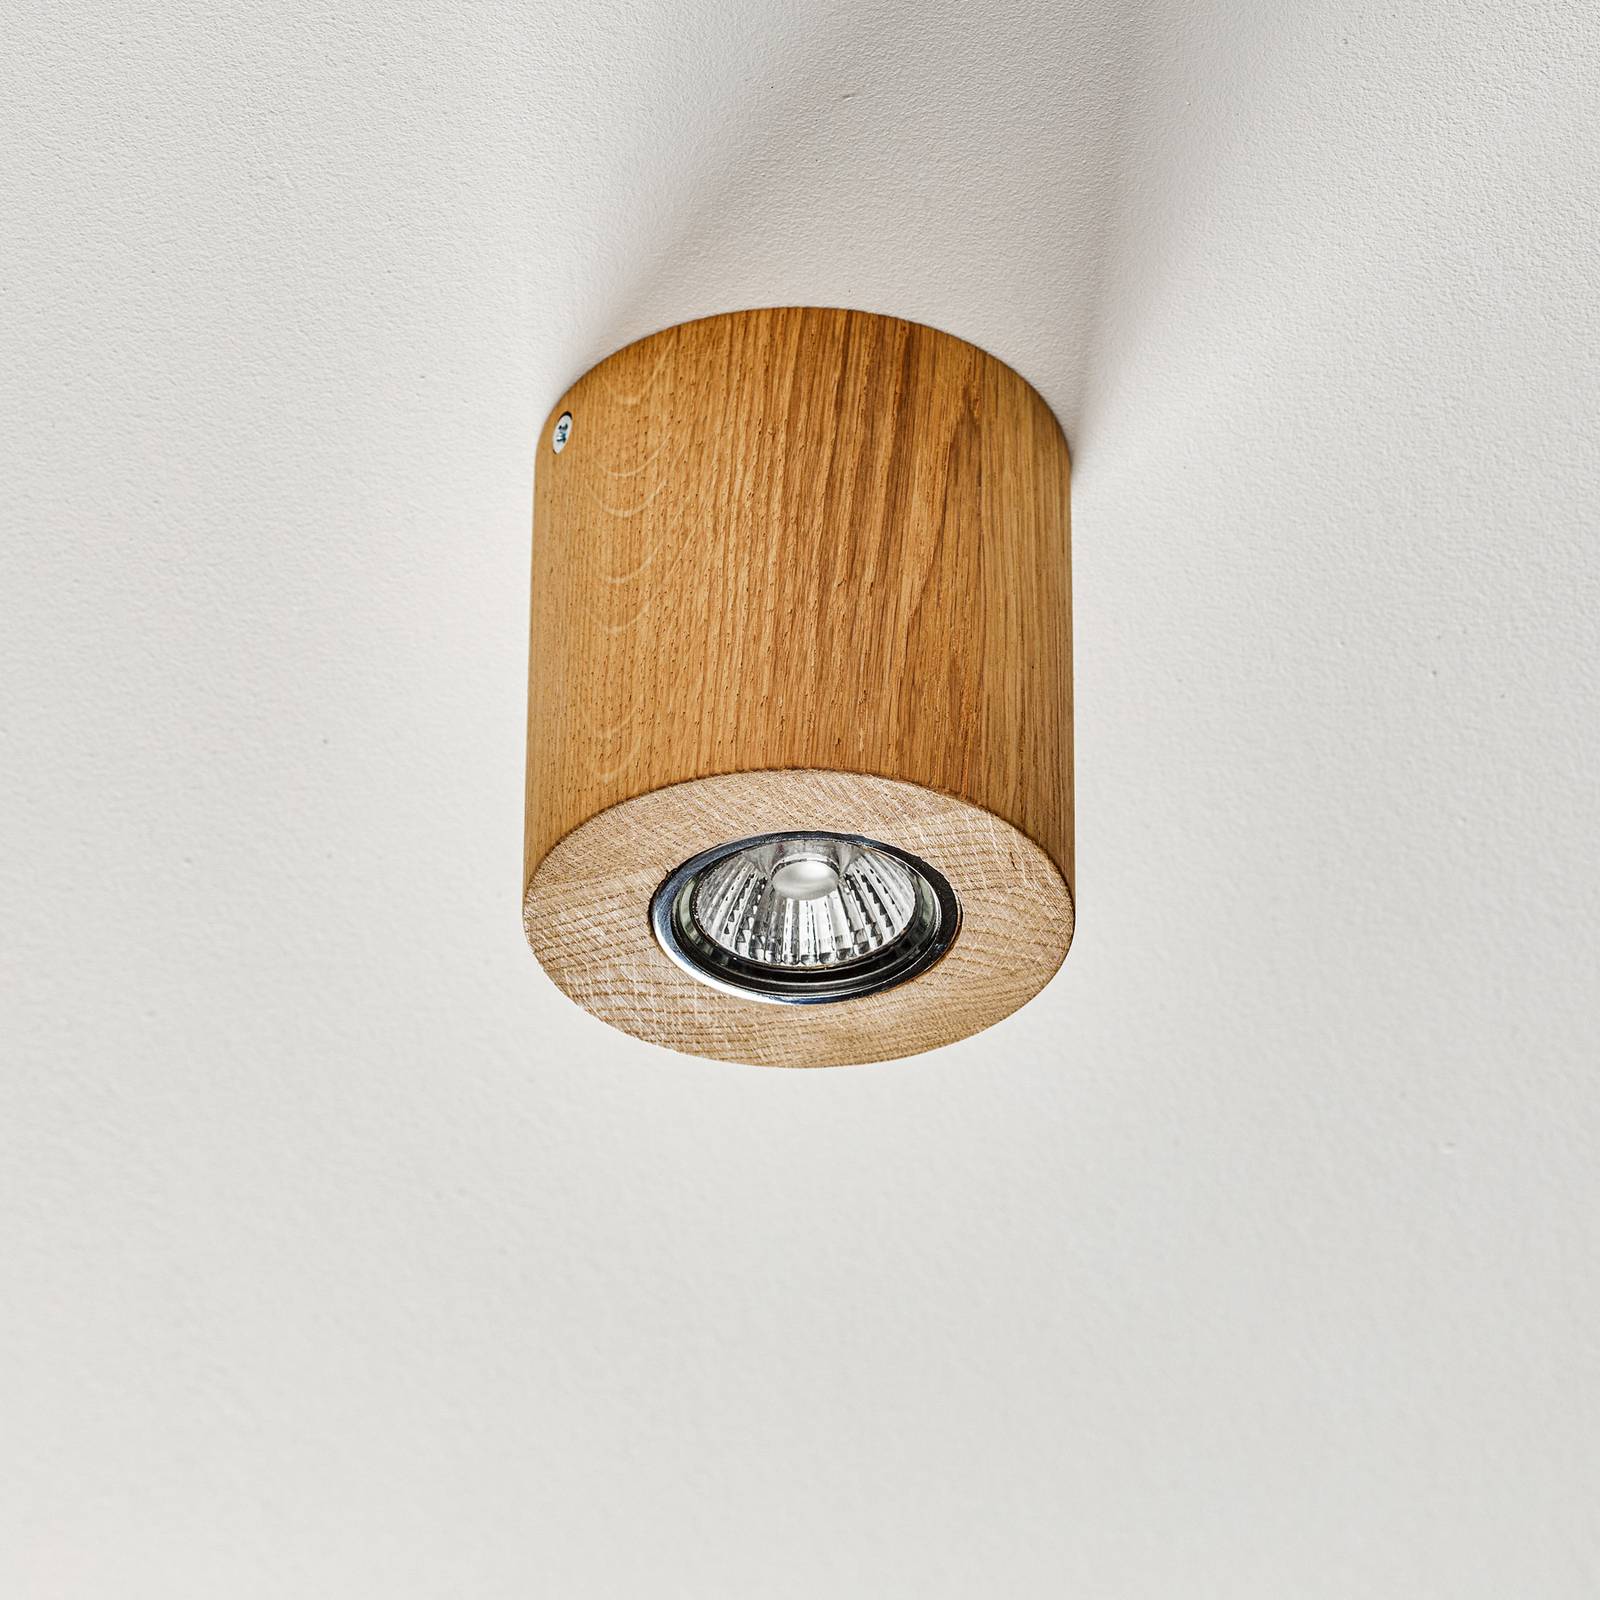 E-shop Stropná lampa Wooddream 1 sv. dub okrúhla 10cm